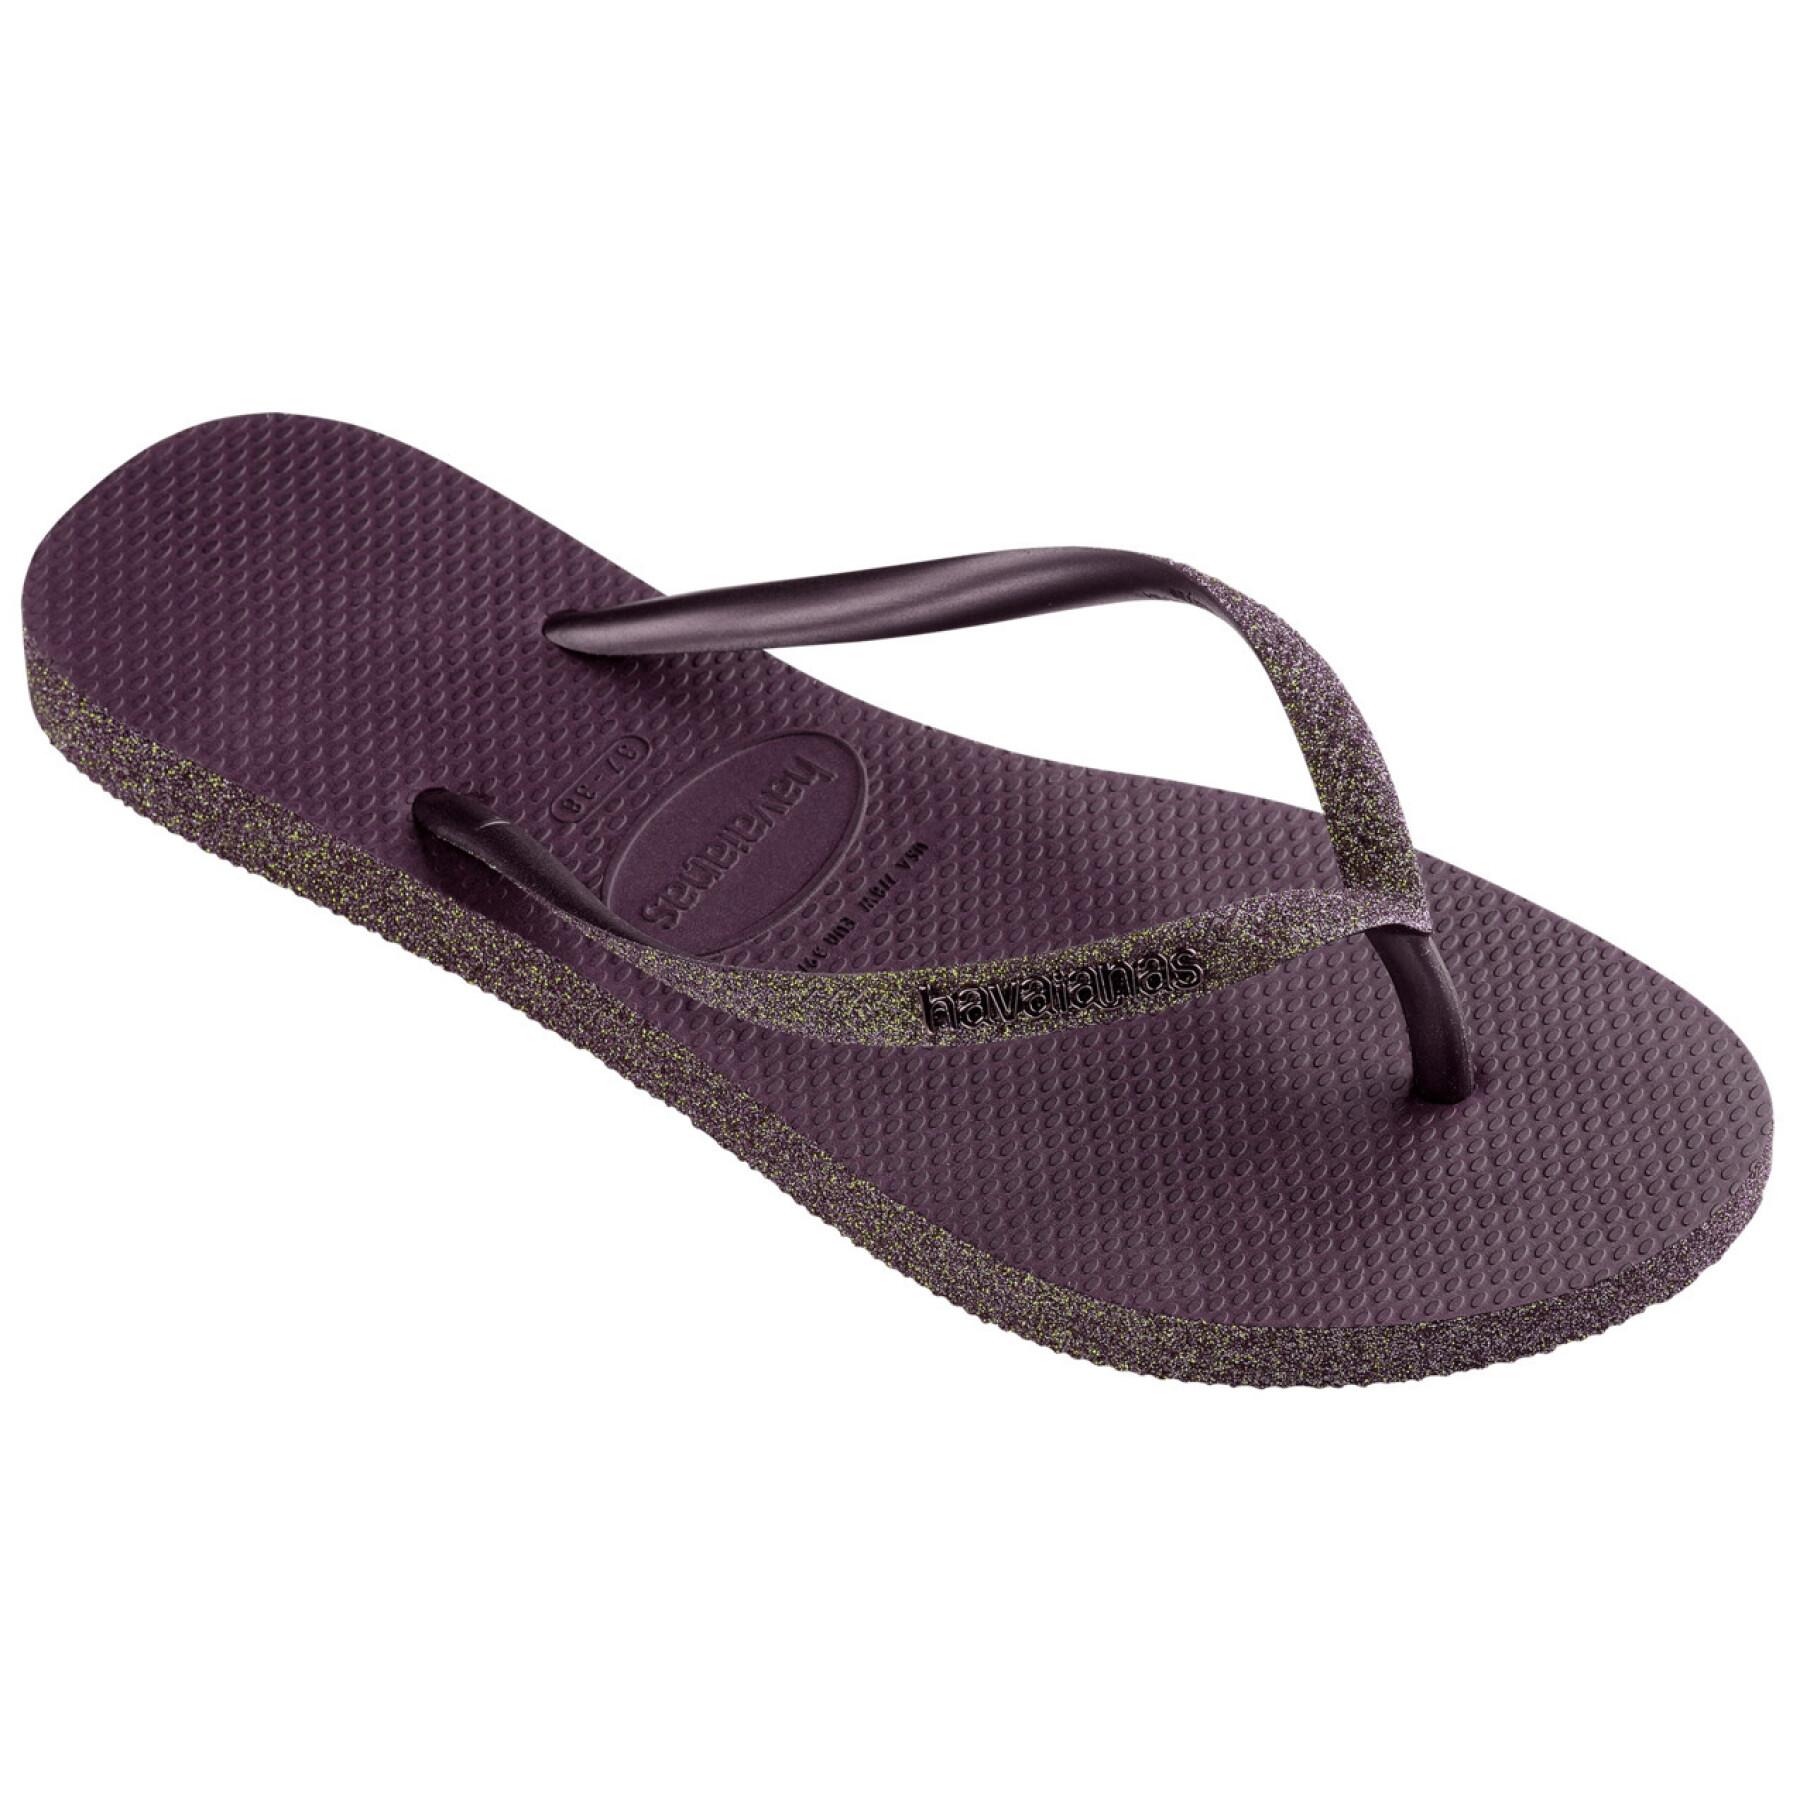 Women's flip-flops Havaianas Slim Sparkle II